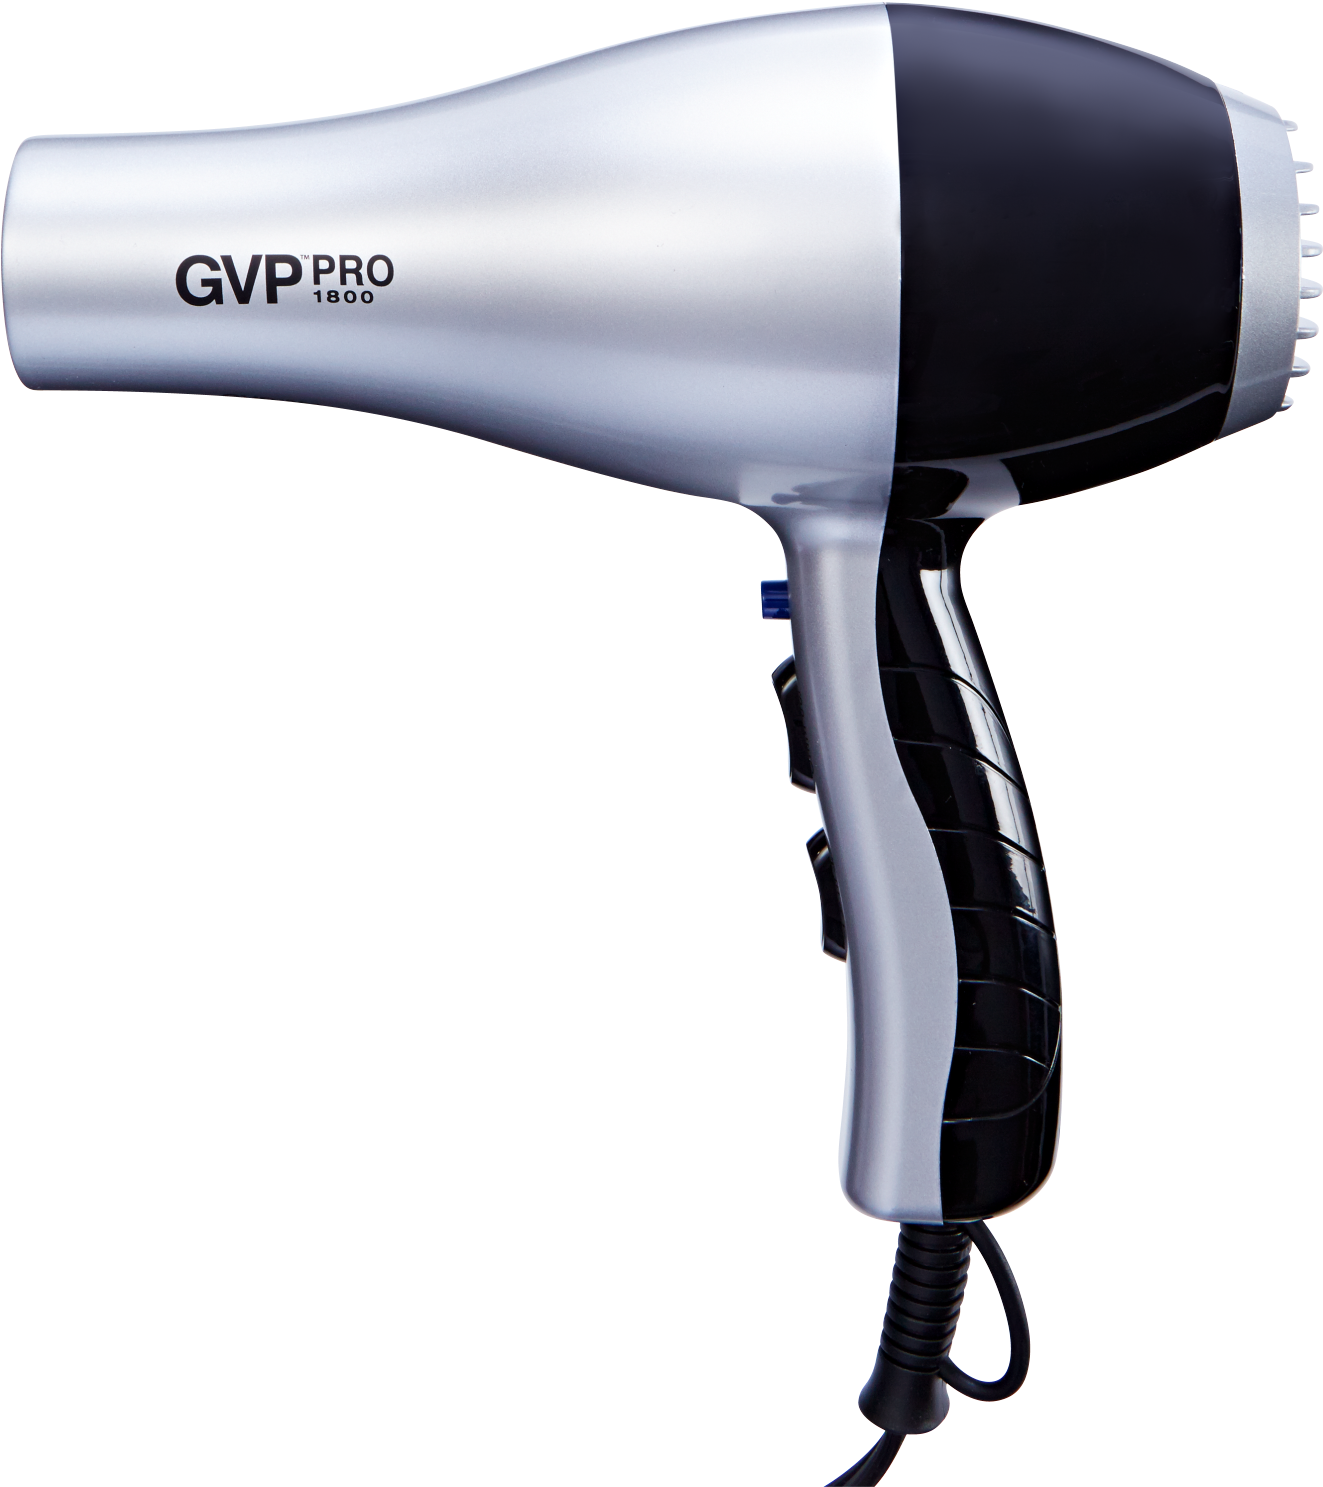 Gvp Pro 1800 Hair Dryer Customer Reviews - Hair Dryer Transparent (1500x1500)